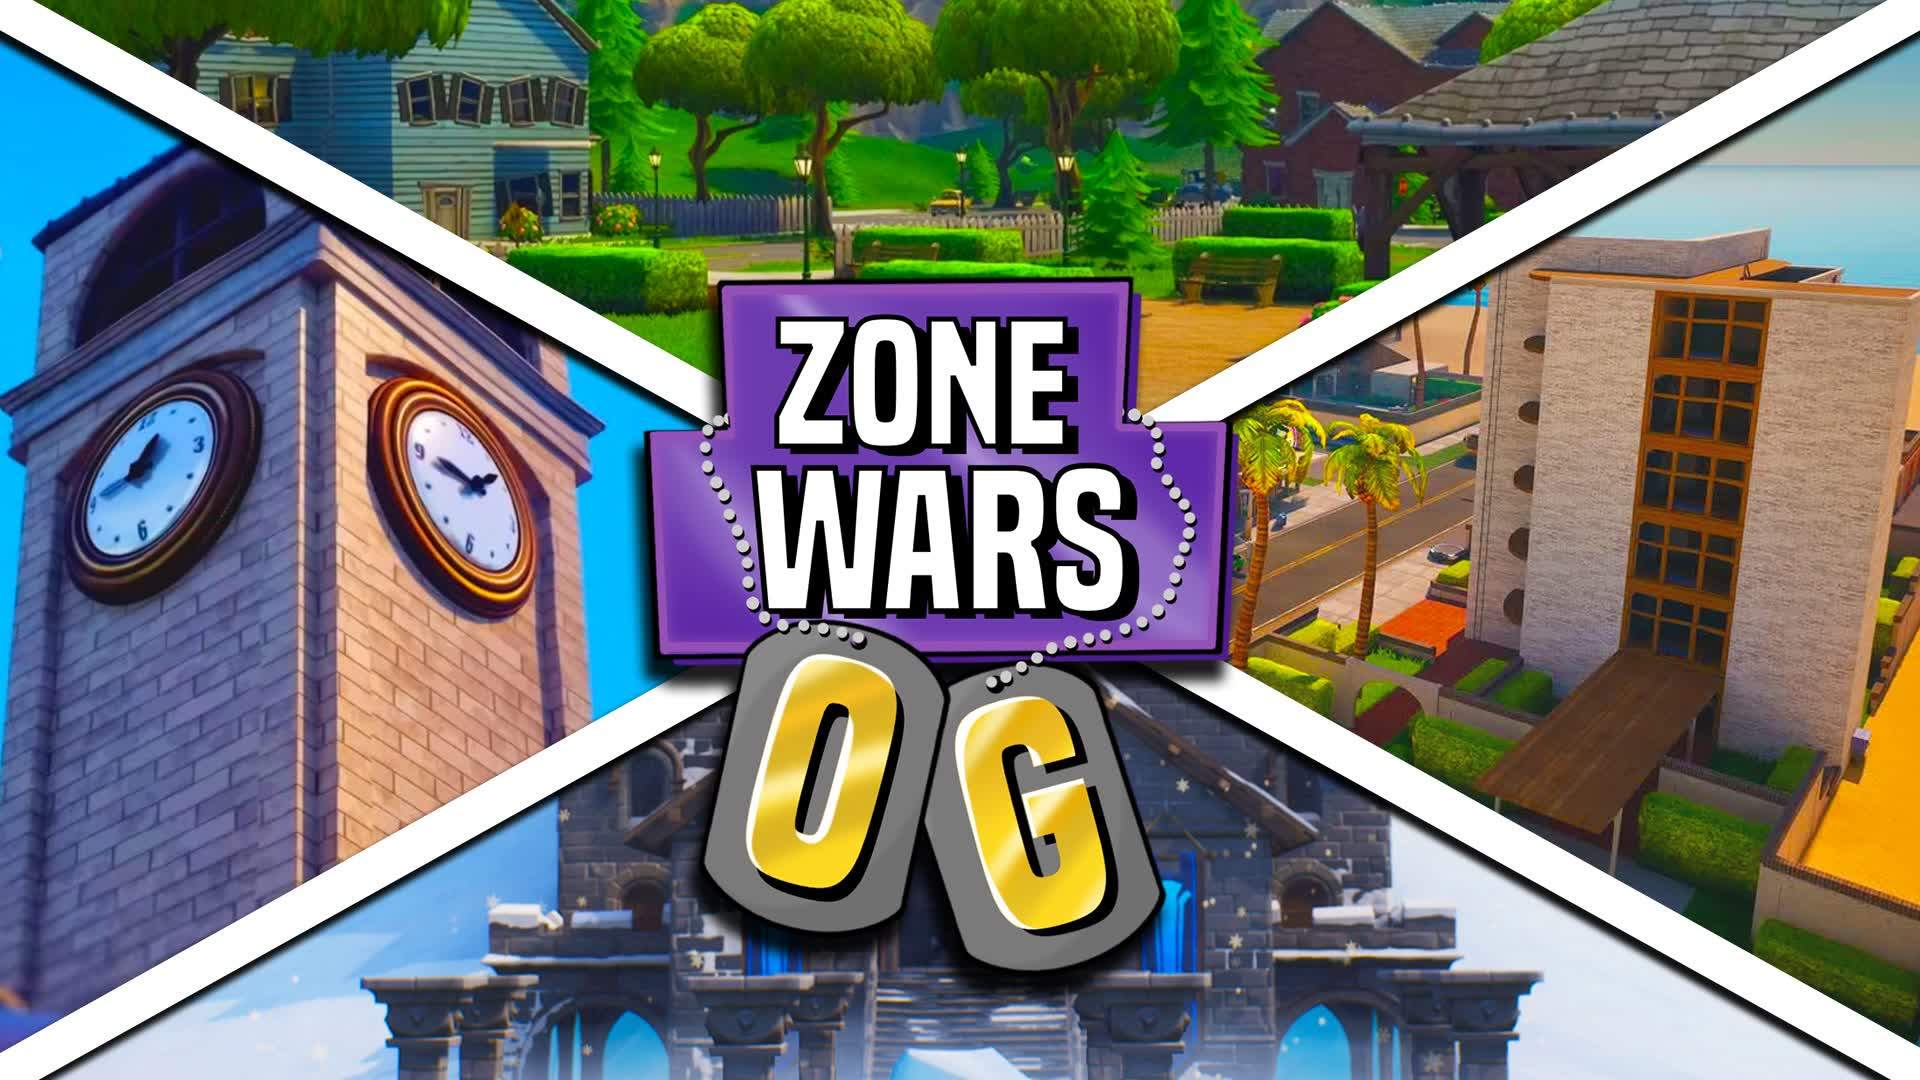 OG Zone Wars